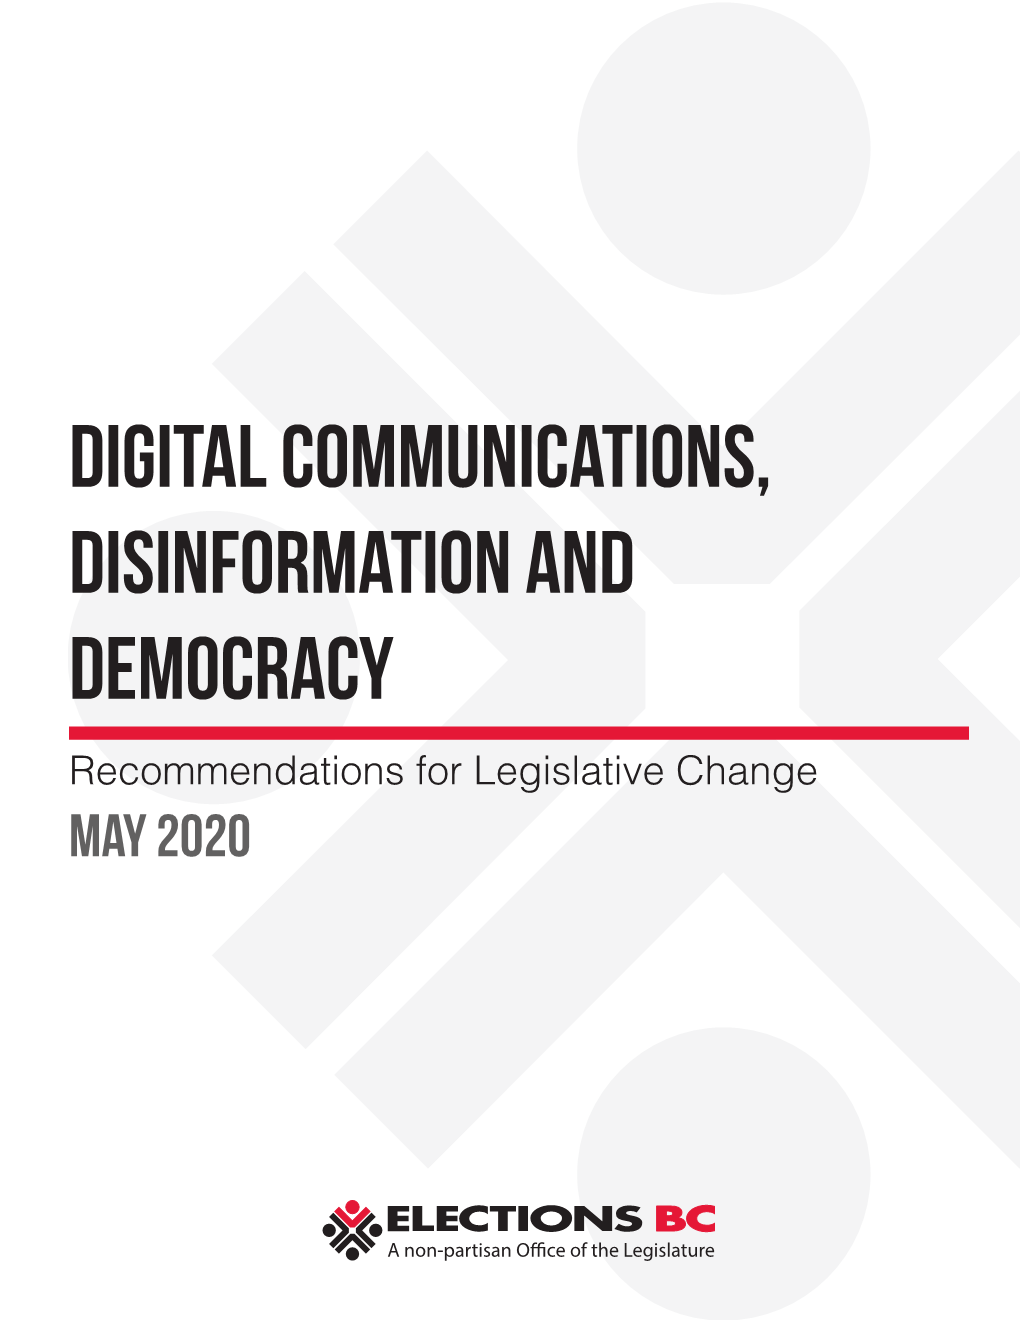 Digital Communications, Disinformation and Democracy Recommendations for Legislative Change May 2020 Elections BC PO Box 9275 Stn Prov Govt Victoria, BC V8W 9J6